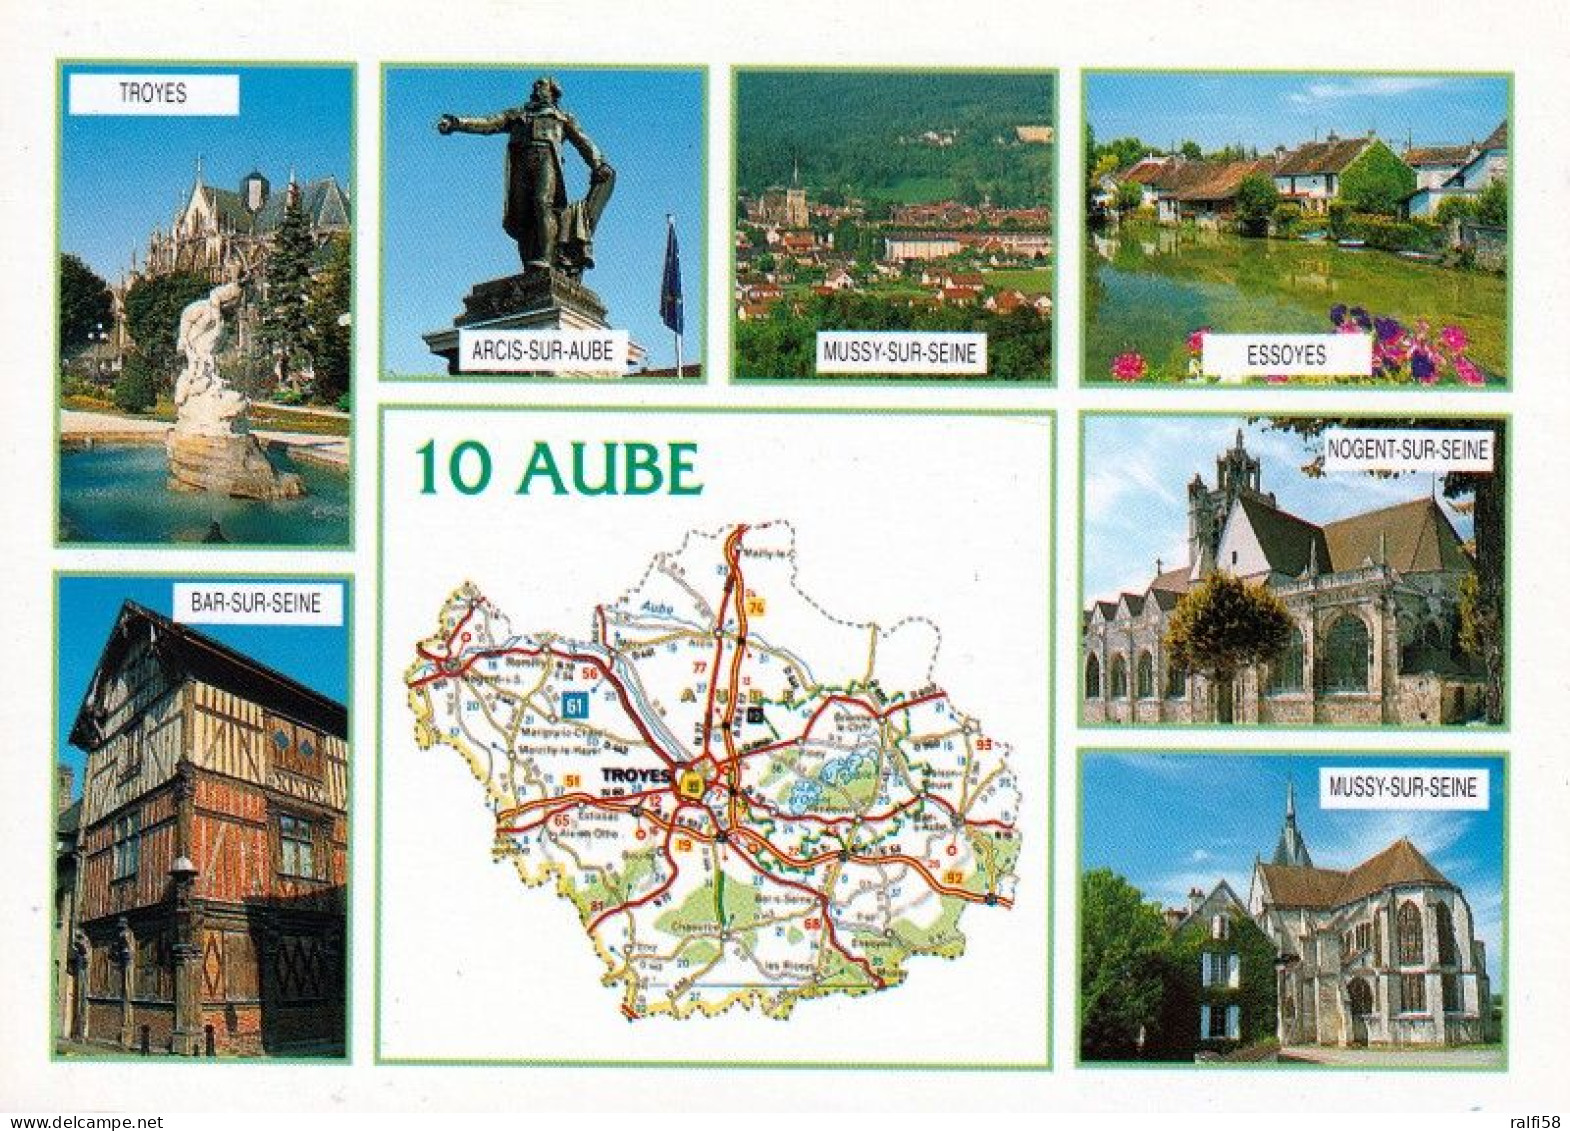 1 Map Of France * 1 Ansichtskarte Mit Der Landkarte - Département Aube - Ordnungsnummer 10 * - Mapas